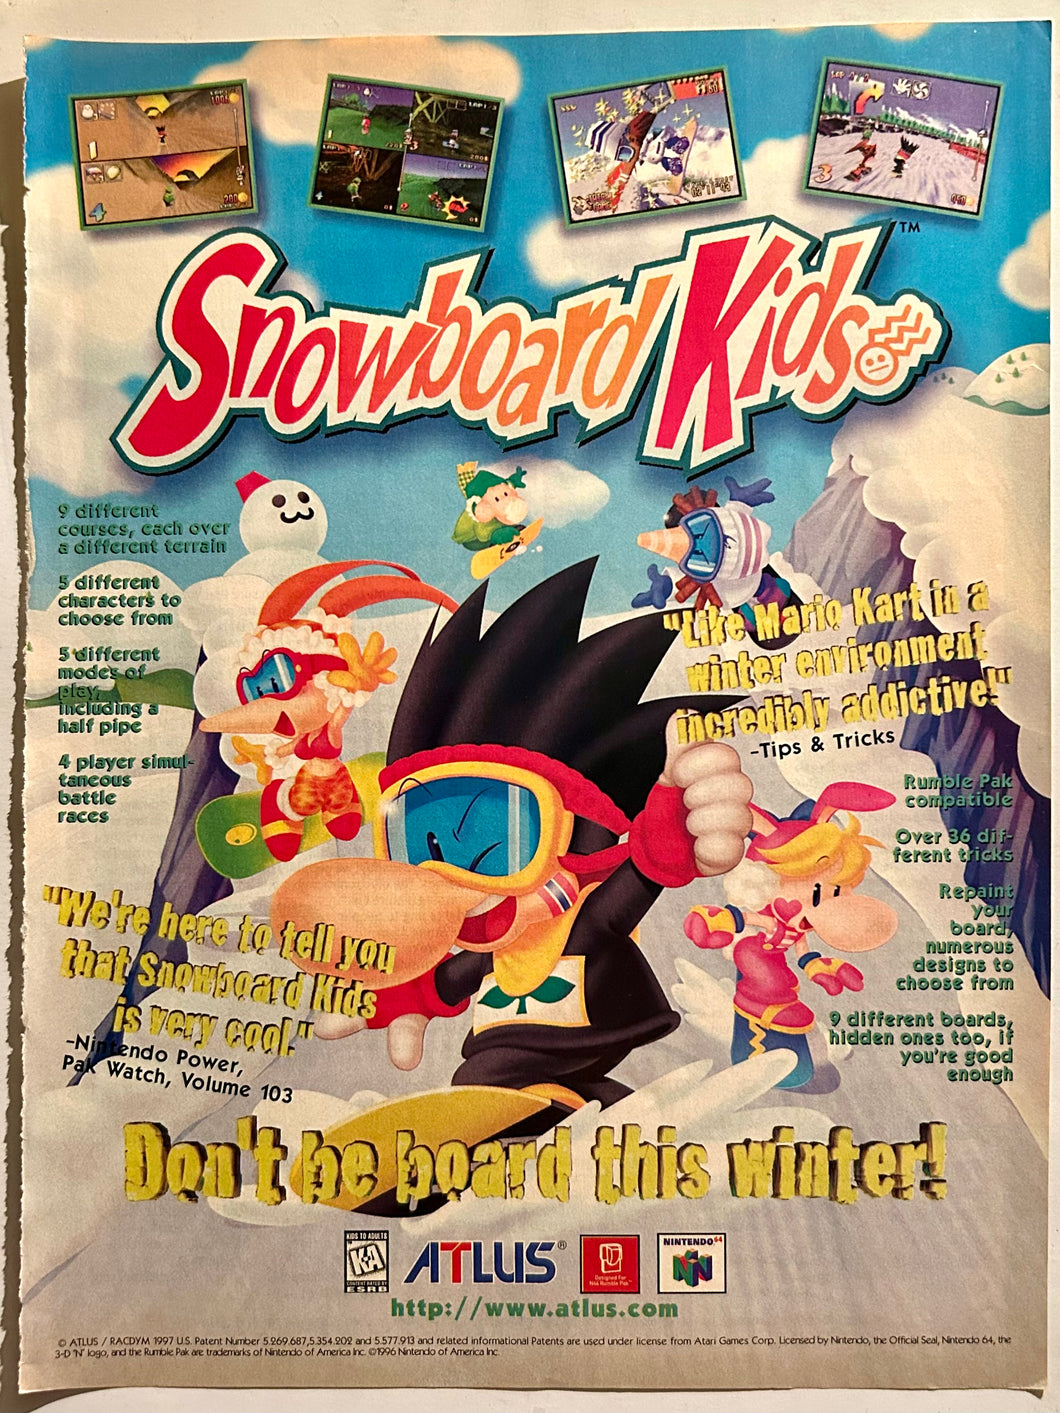 Snowboard Kids - N64 - Original Vintage Advertisement - Print Ads - Laminated A4 Poster